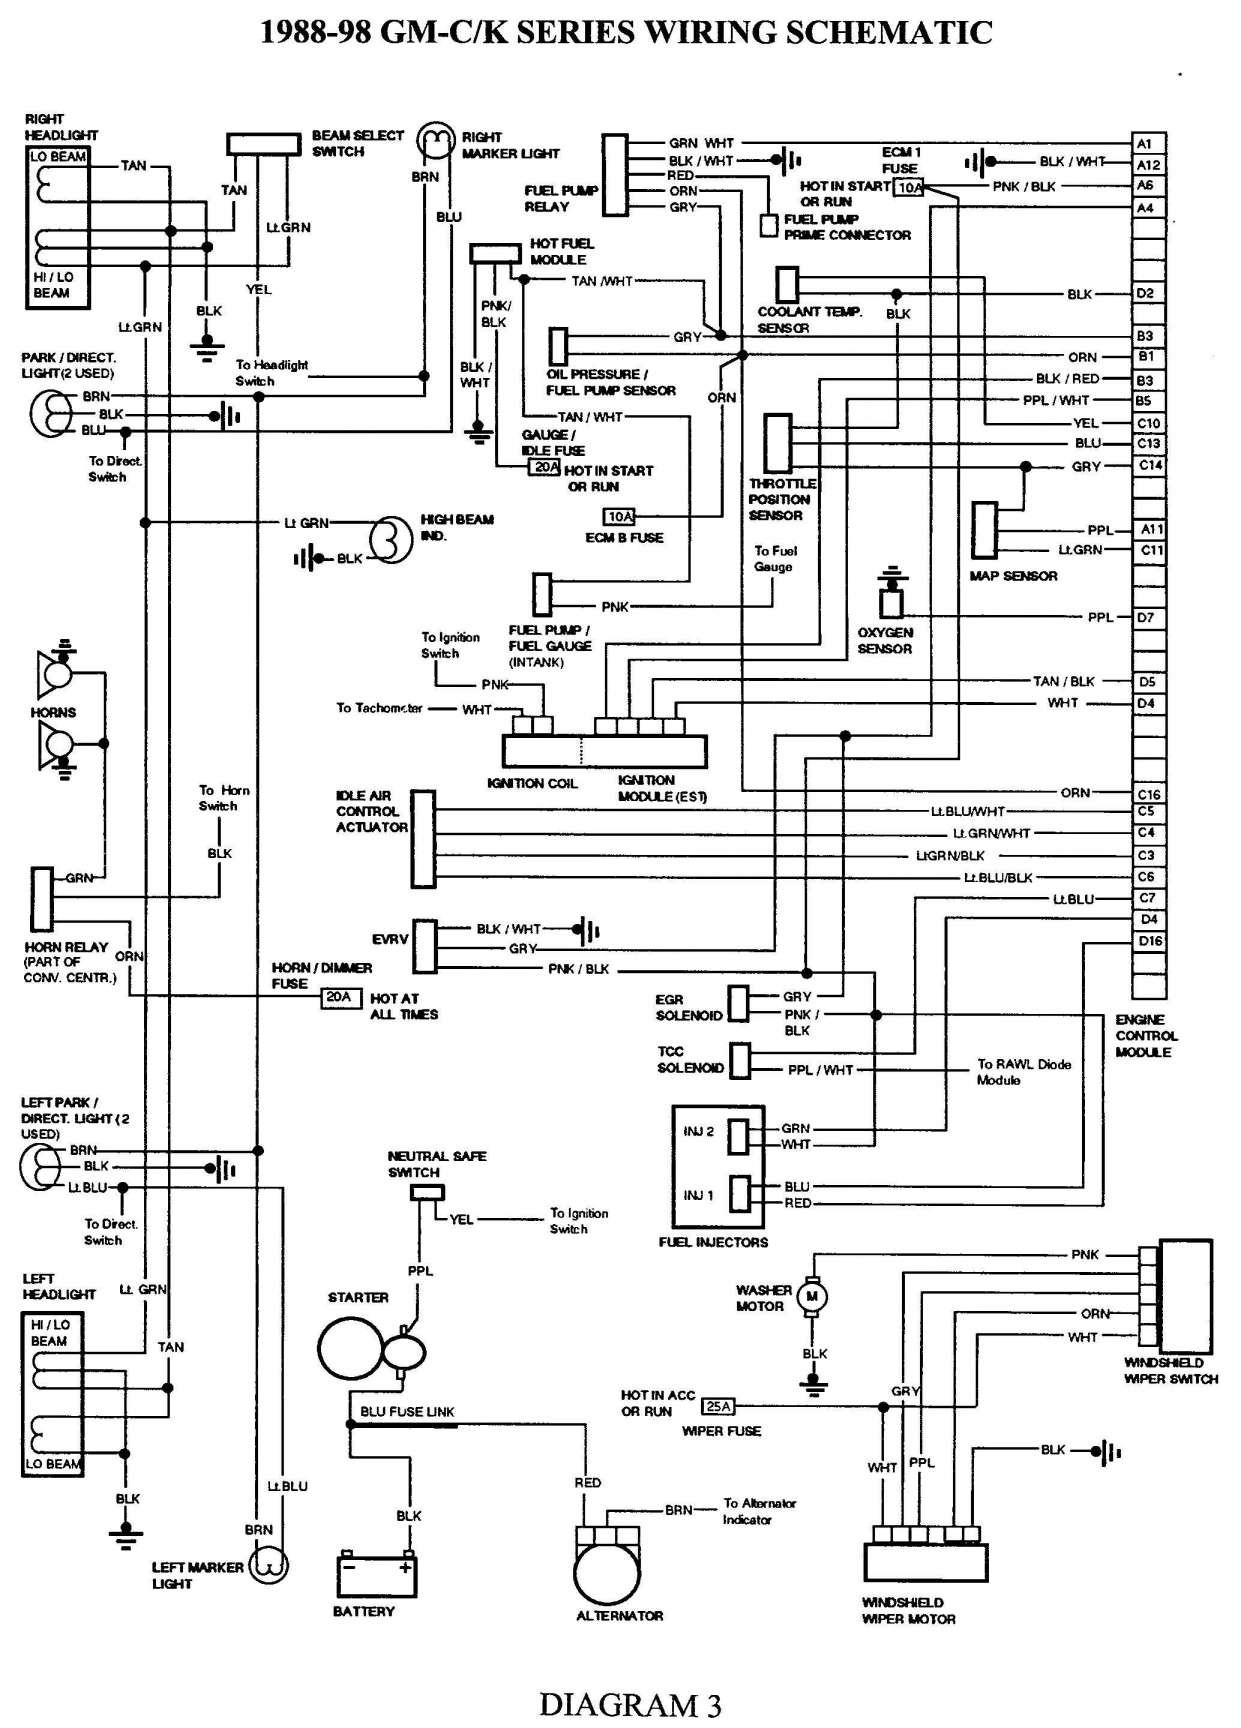 1988 Chev Truck Wire Harness Transmission Schematic 12 1988 Chevy Truck Wiring Diagram Truck Diagram Wiringg